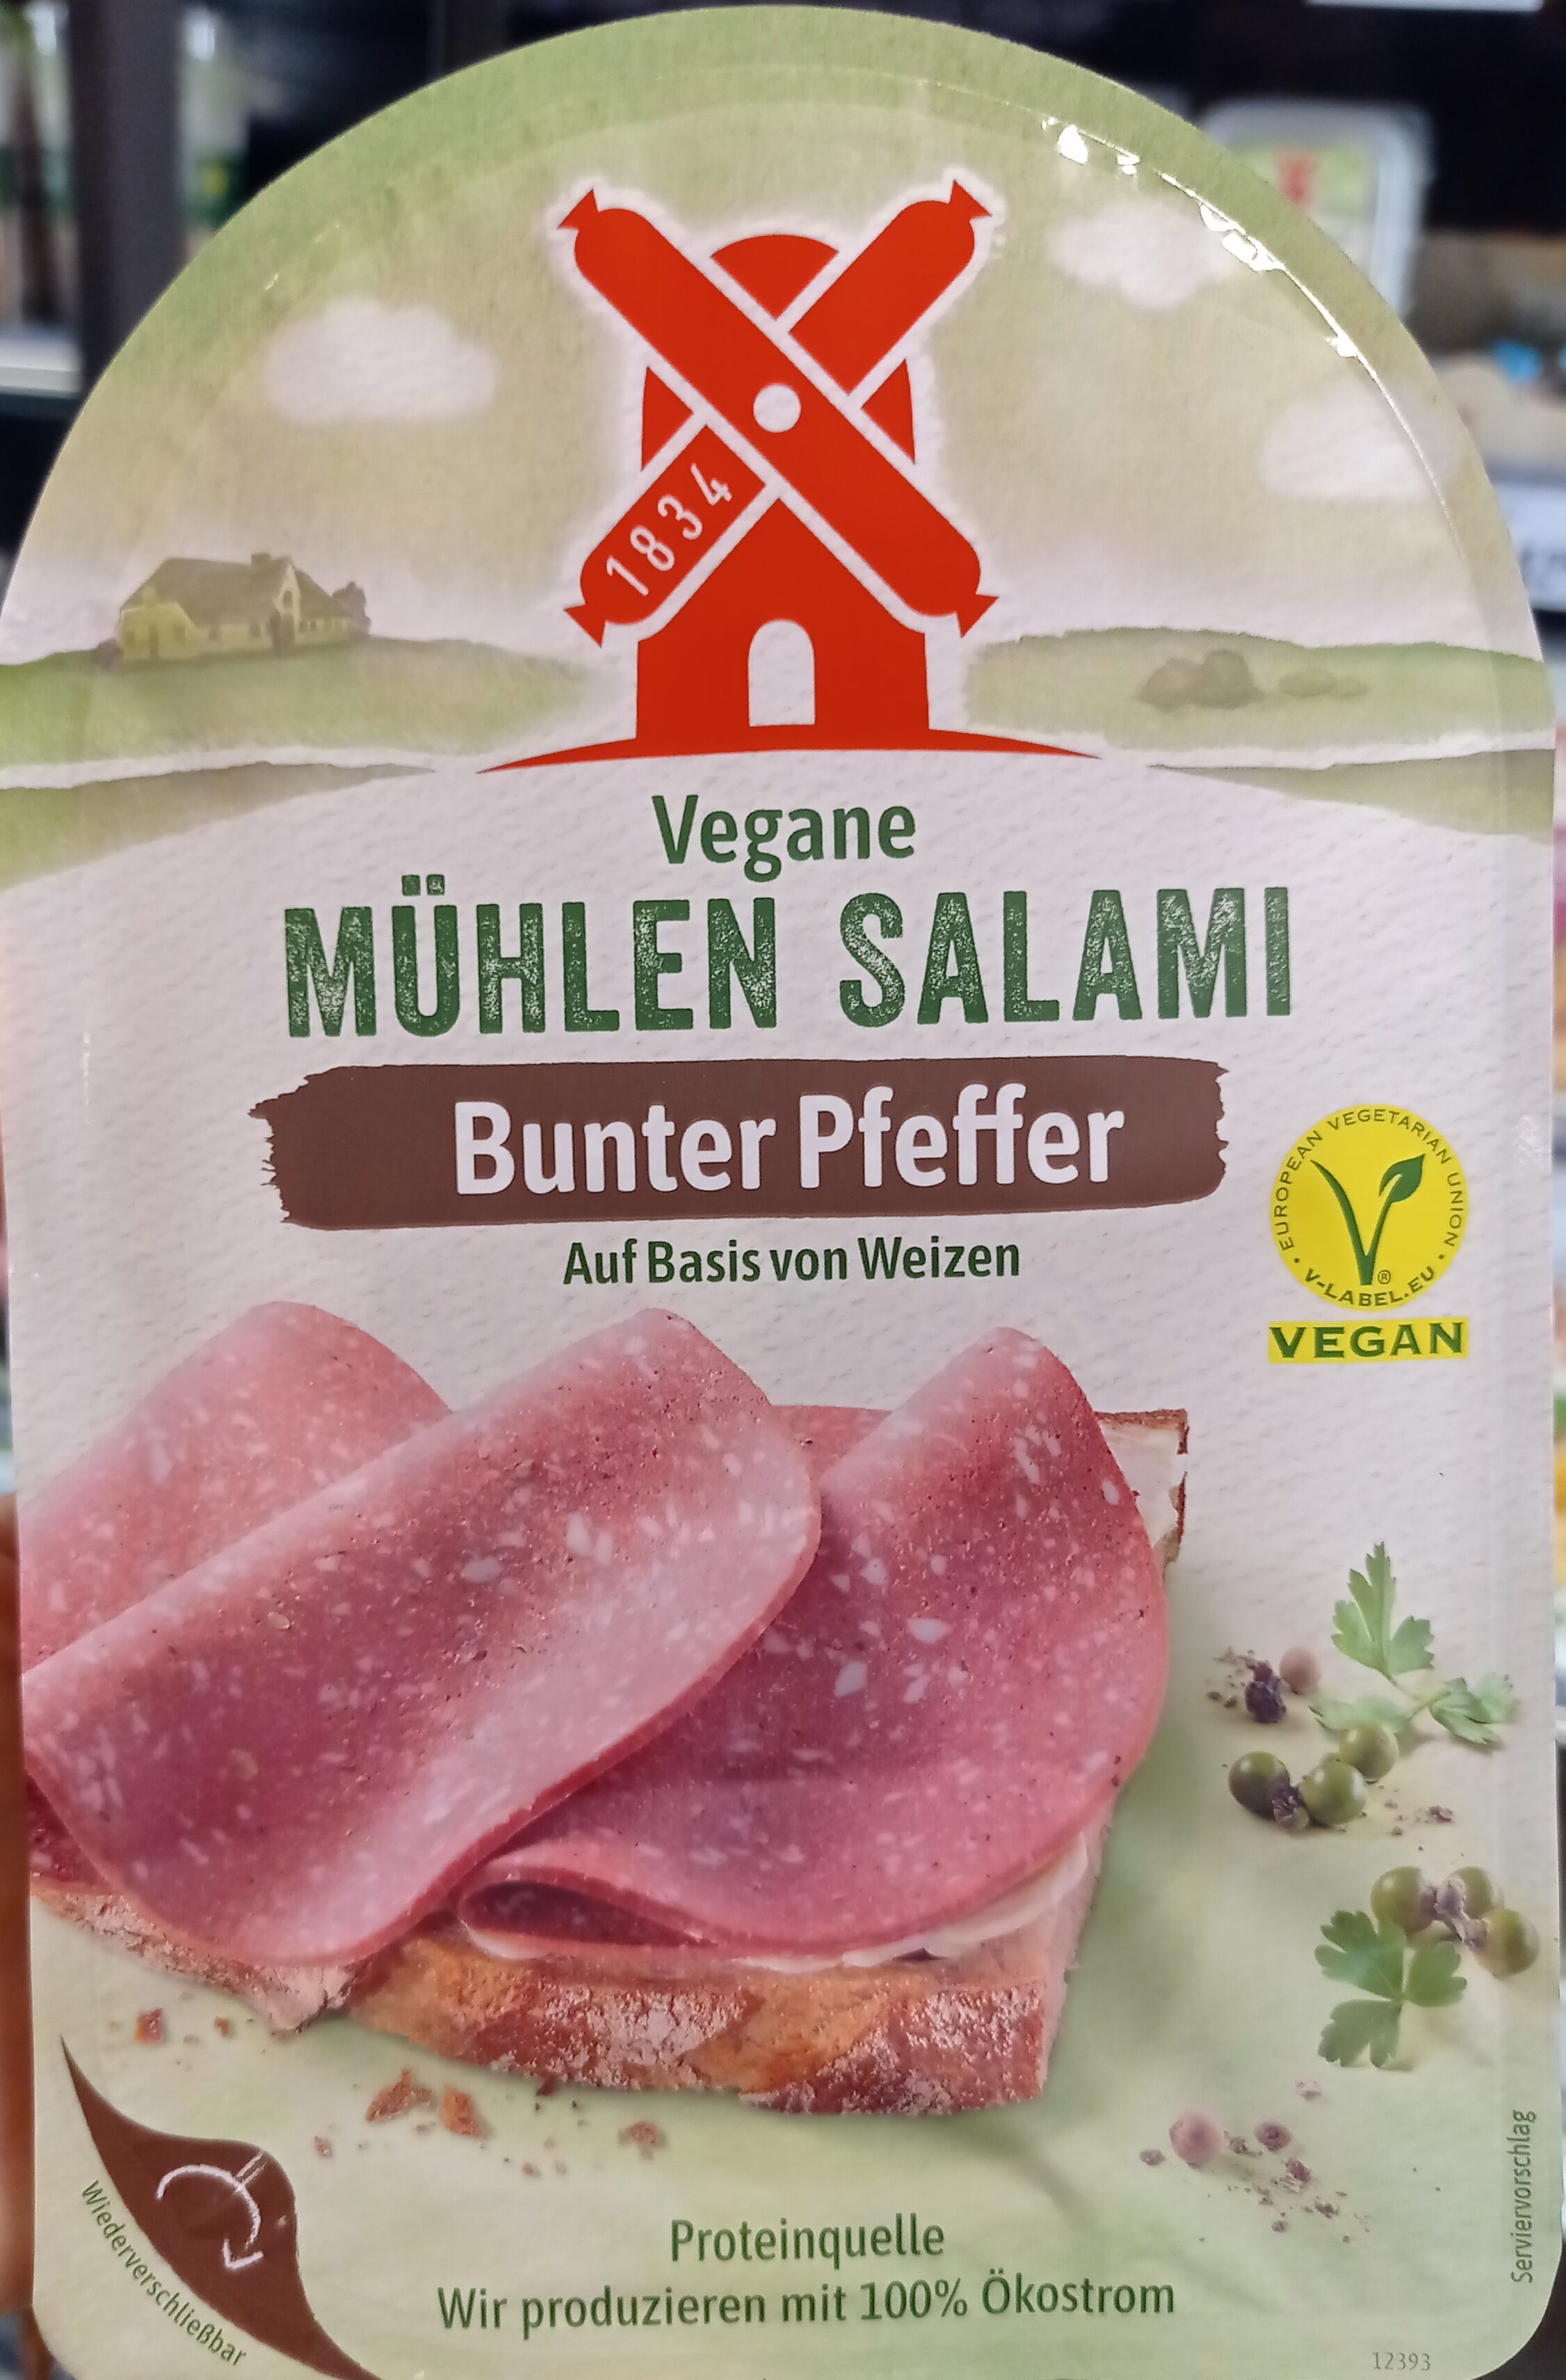 Vegane Mühlen Salami bunter Pfeffer - Product - de